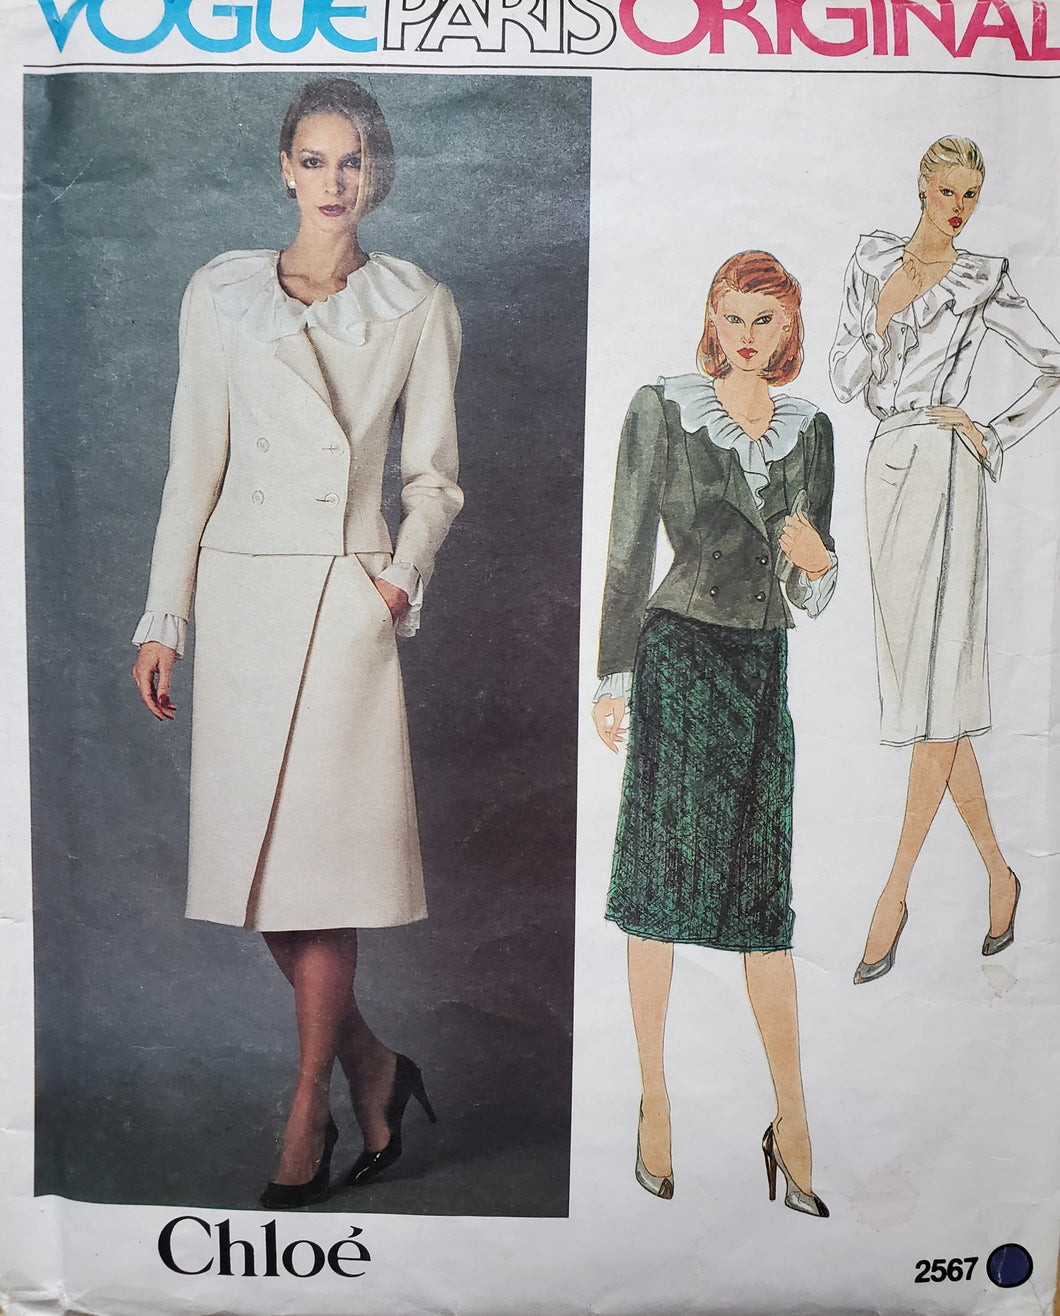 Vintage Vogue Pattern 2567, UNCUT, Paris Original Designer Chloe, Misses Skirt, Blouse and Jacket